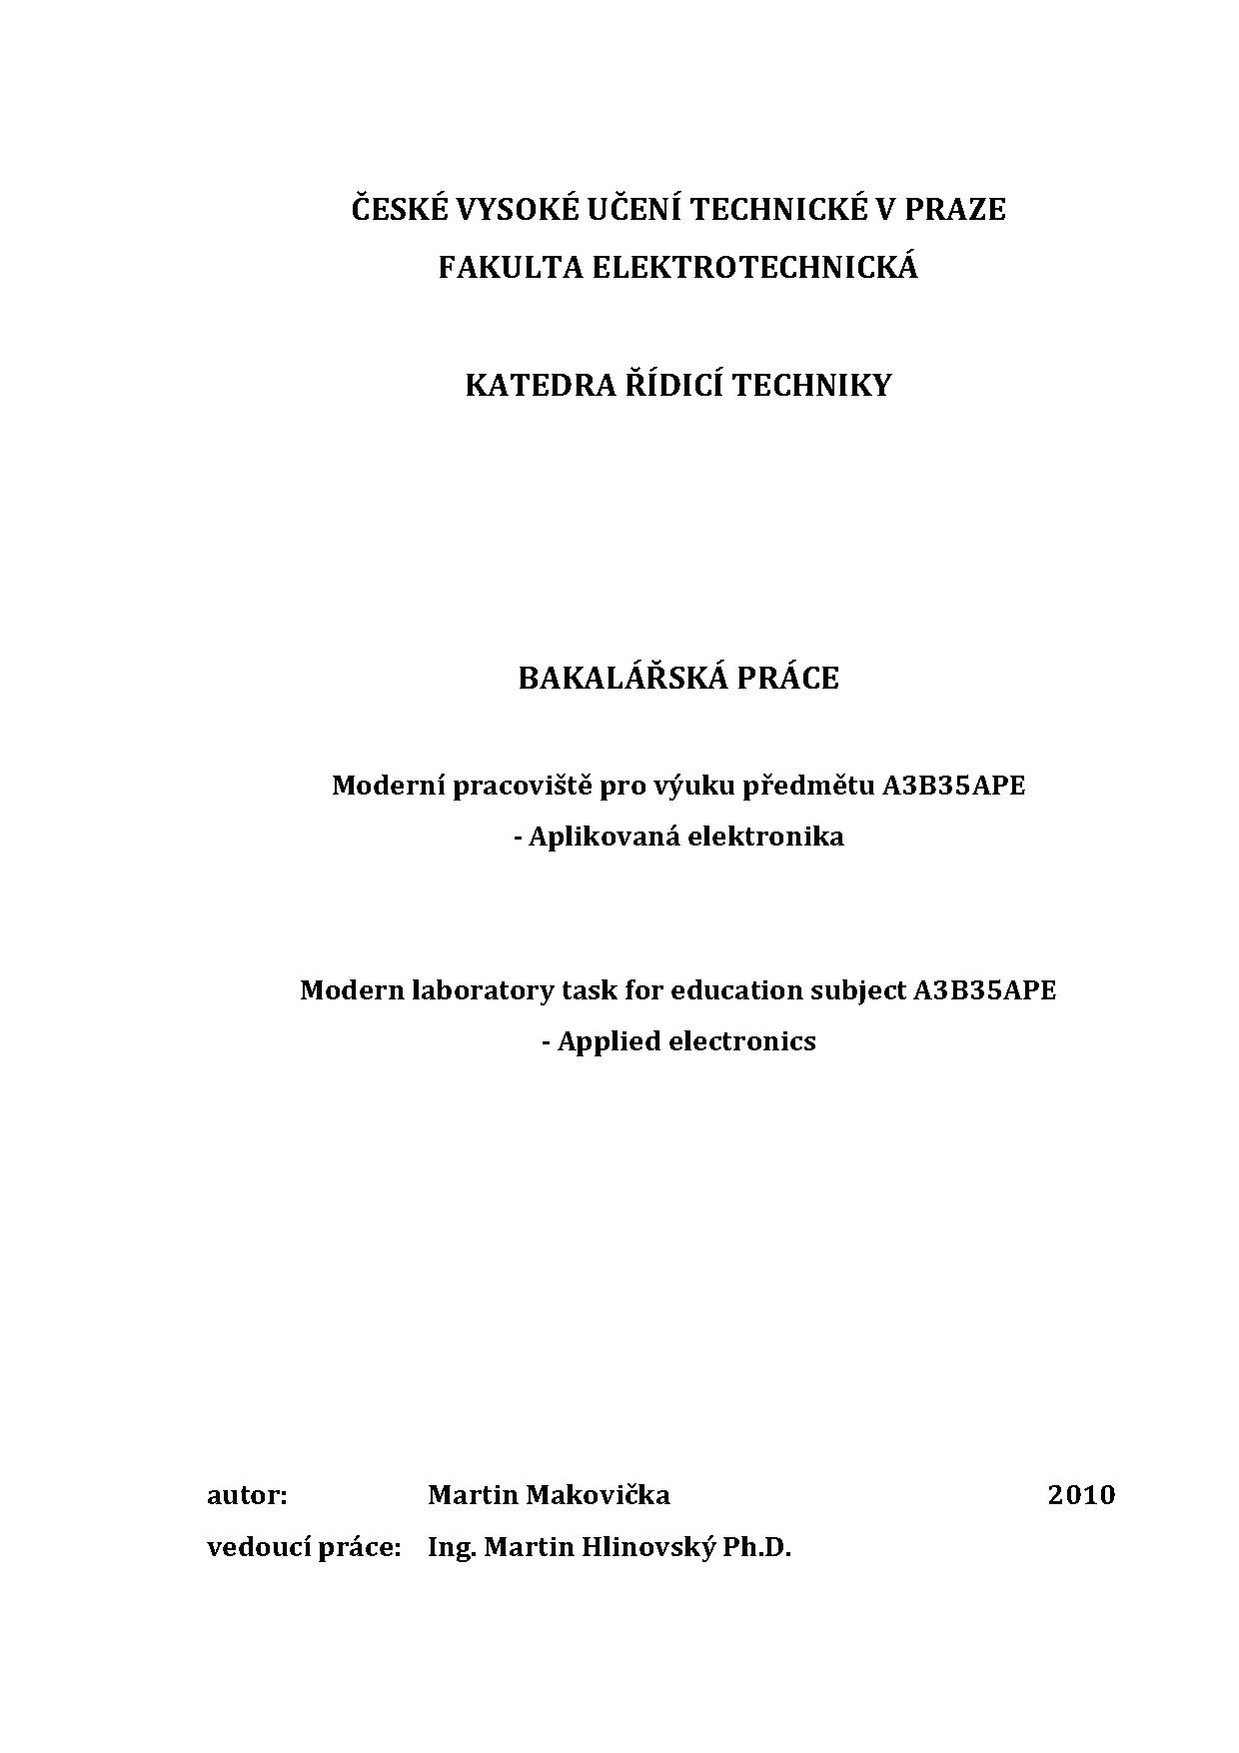 Bp 2010 makovicka martin.pdf